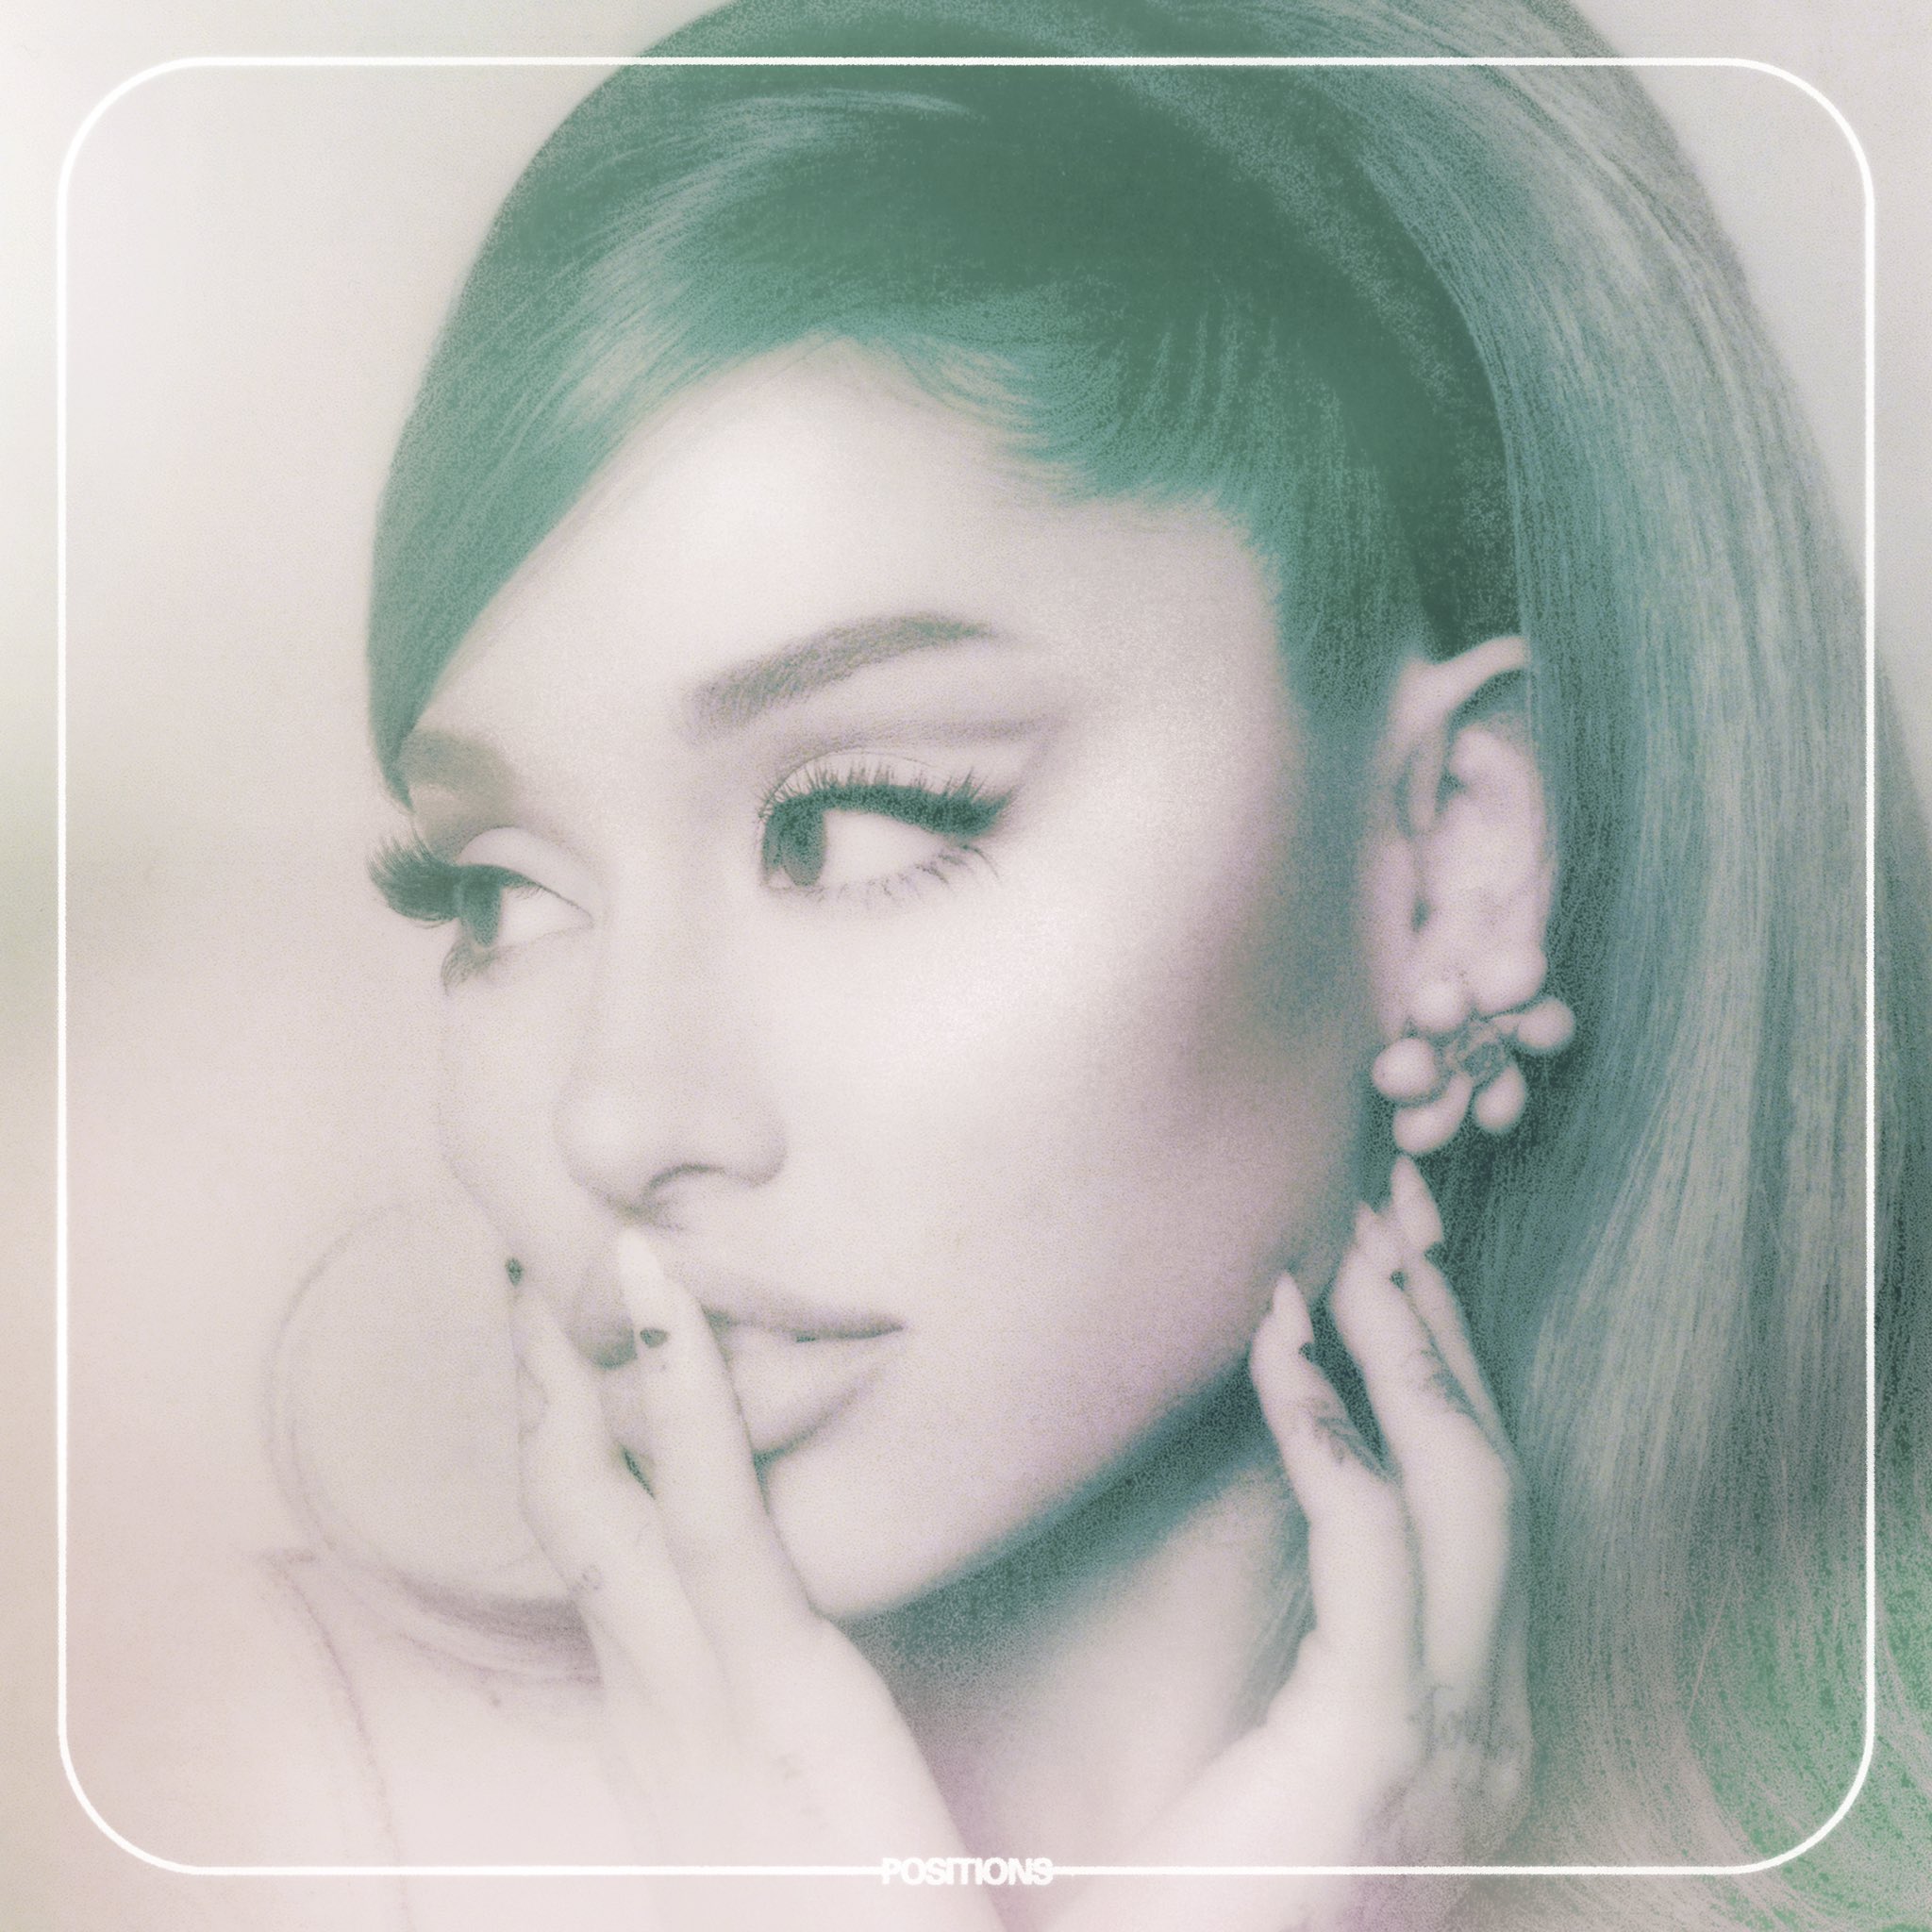 Ariana Grande New Music: Album No. 7 Details, Quotes